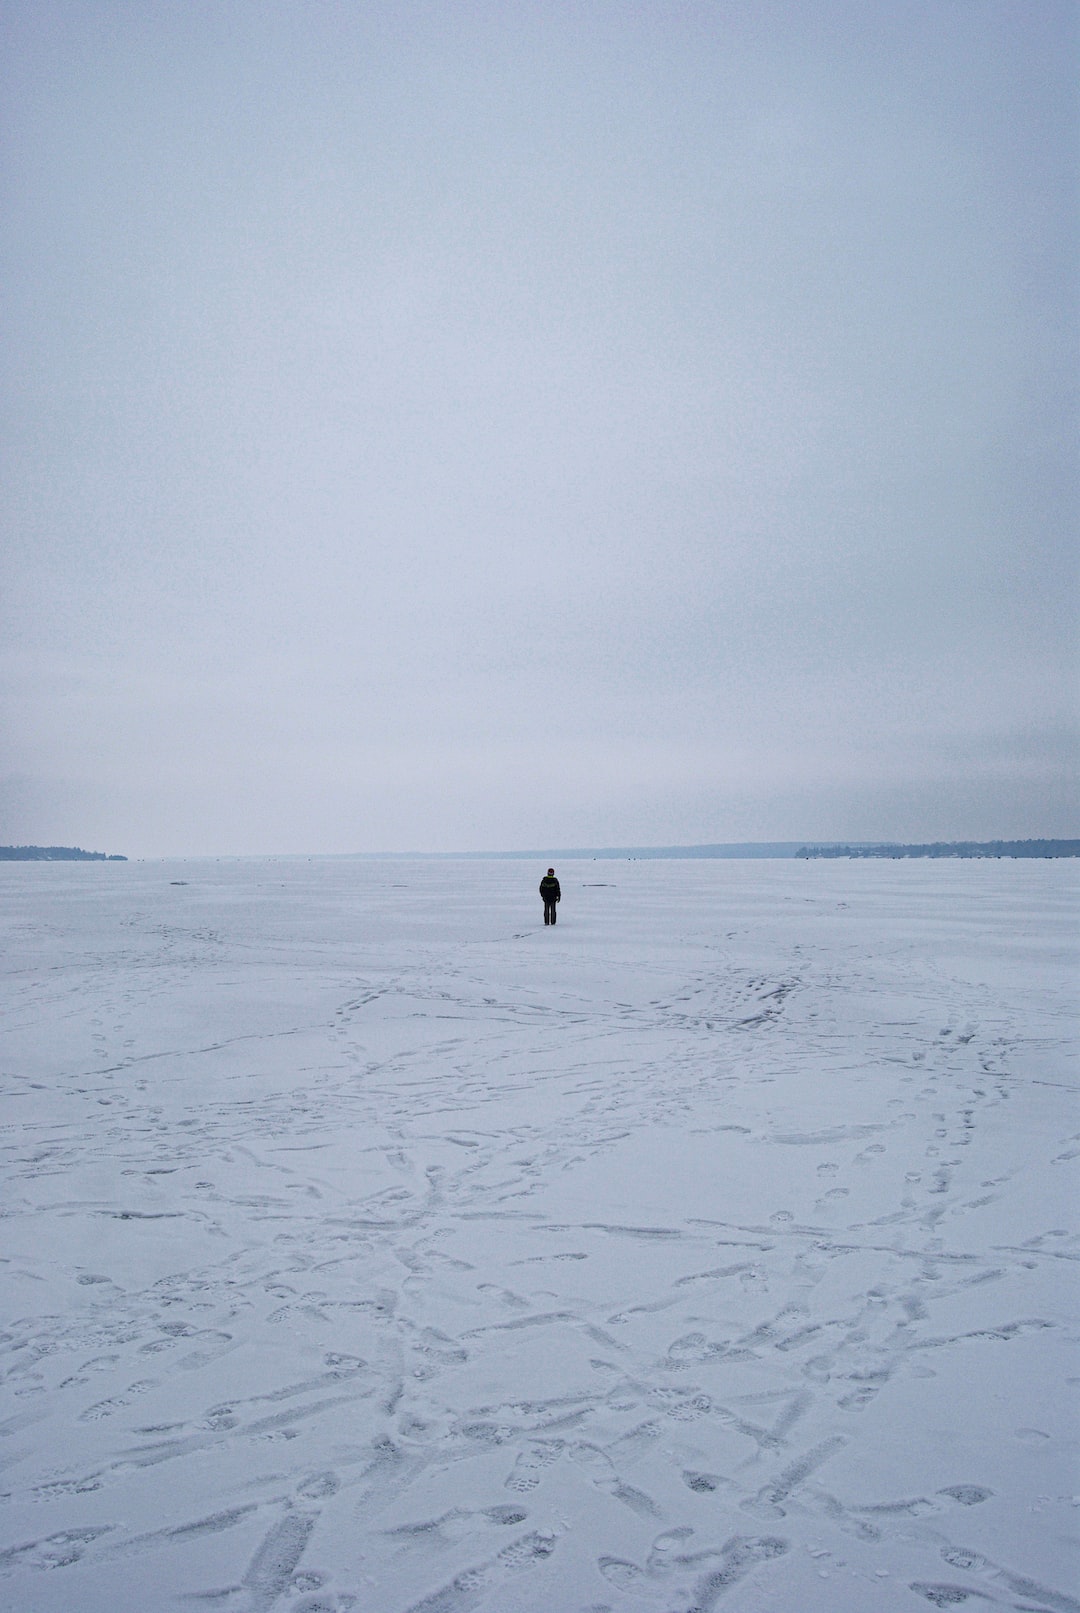 Solitary figure on frozen lake in winter